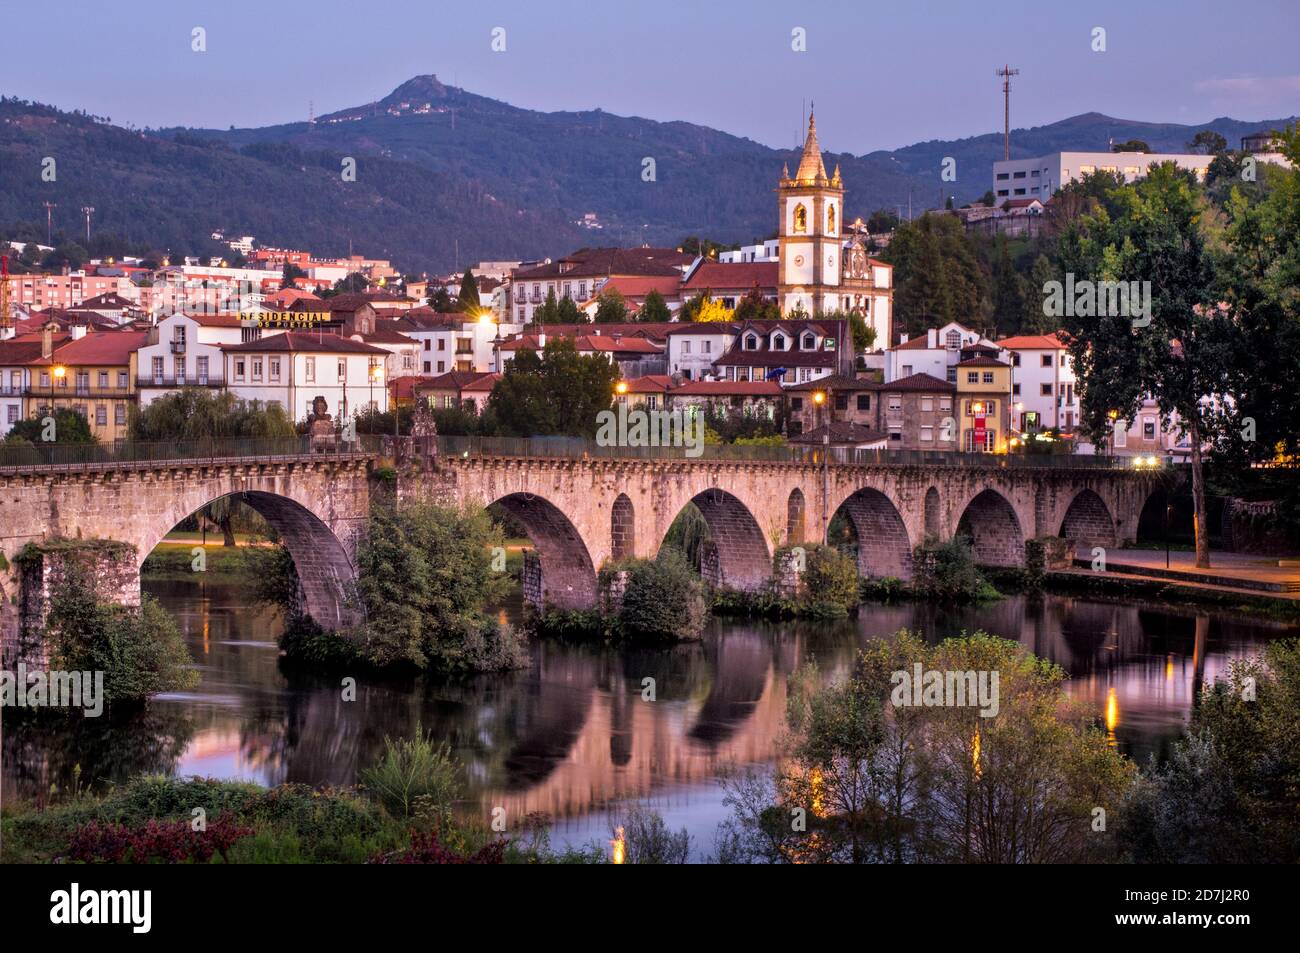 Ponte da Barca - Medieval bridge, Minho, Portugal, Europe Stock Photo